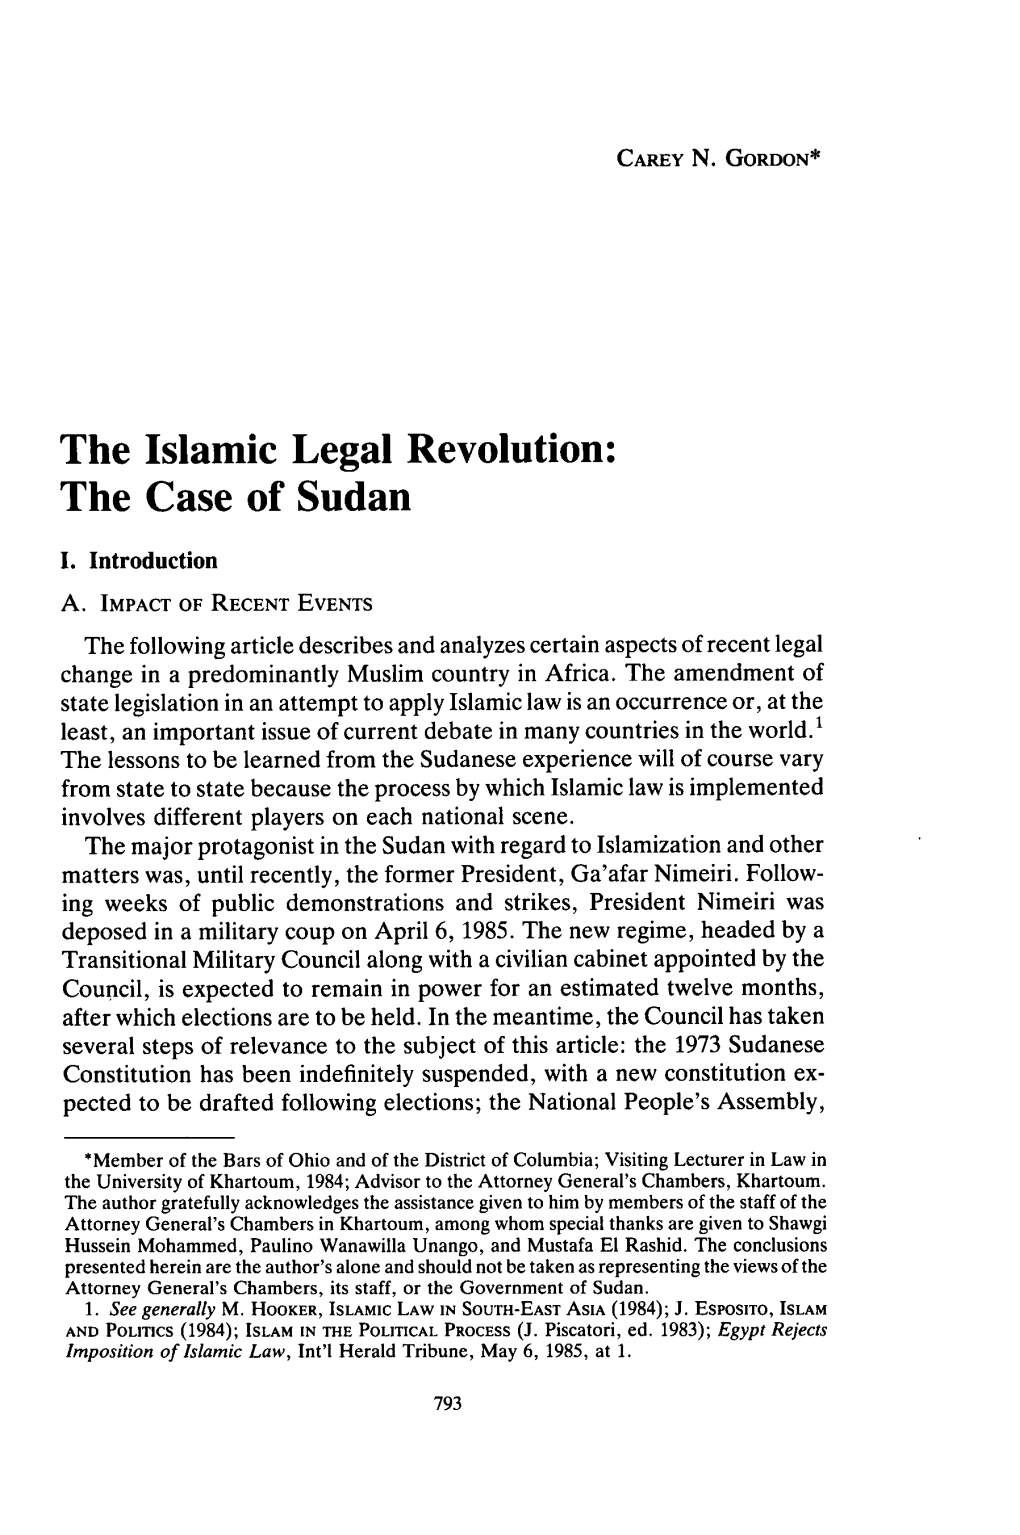 The Islamic Legal Revolution: the Case of Sudan